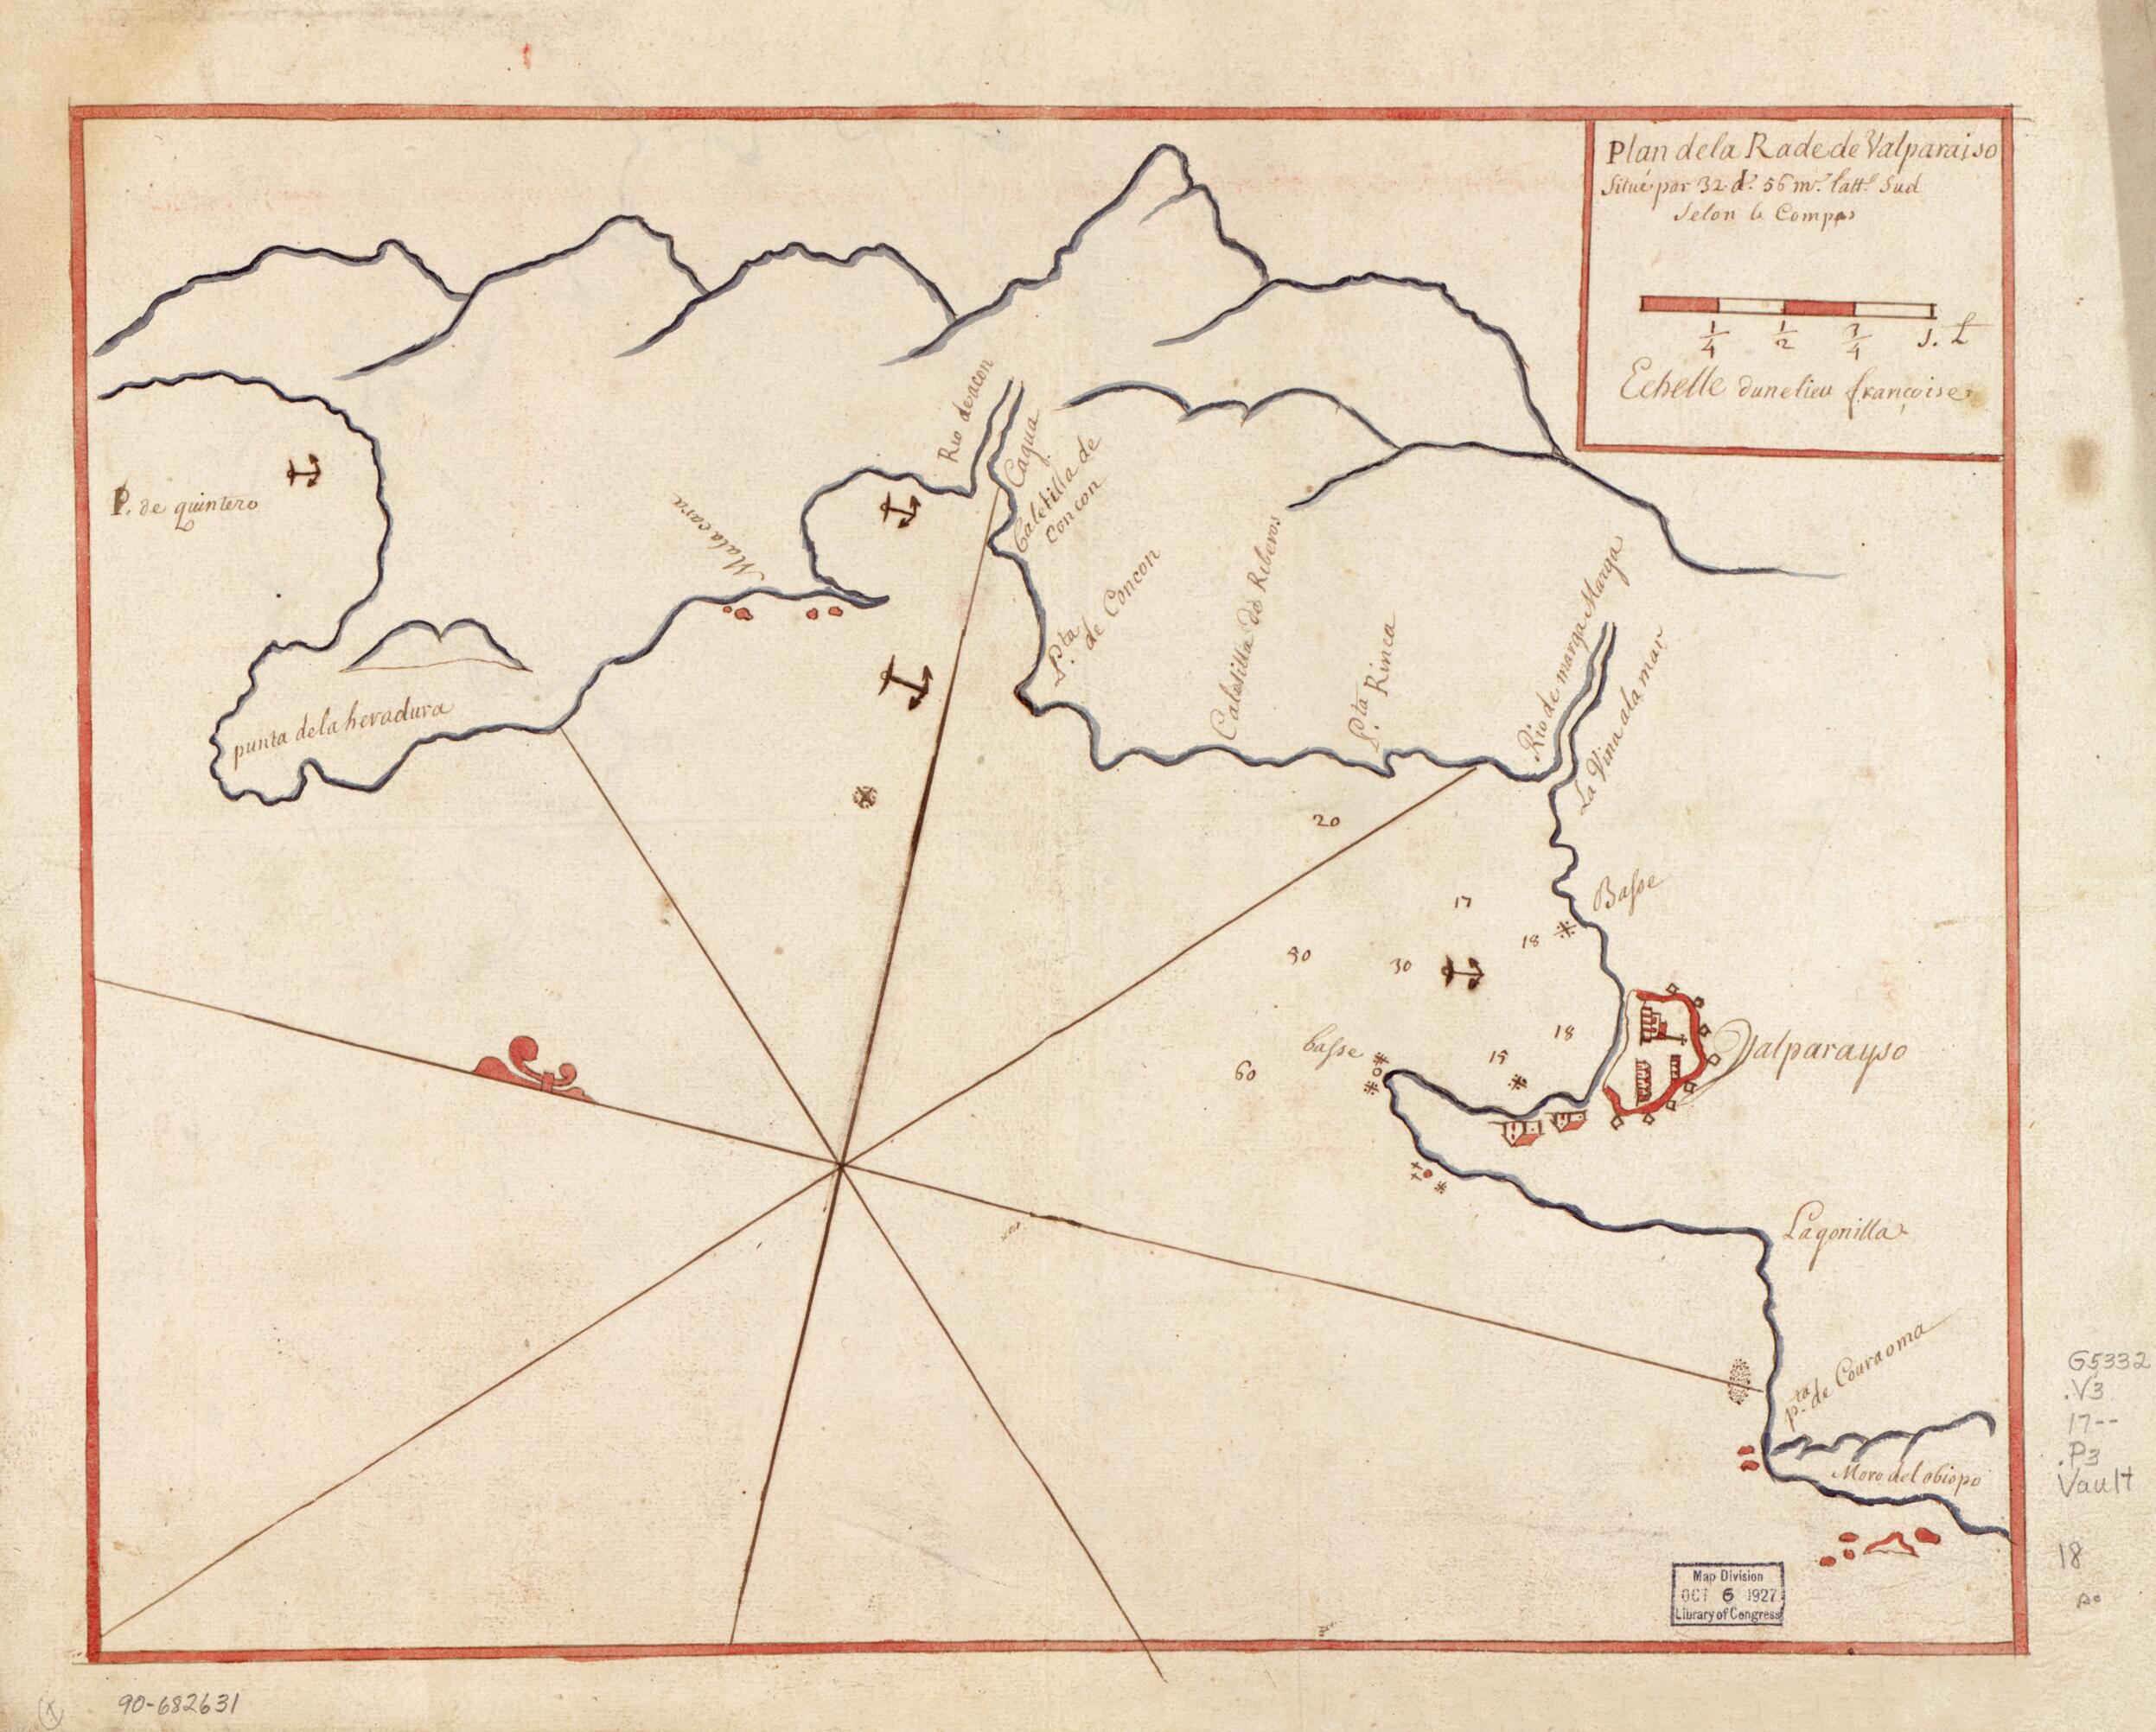 This old map of Plan De La Rade De Valparaiso Situé Par 32 Ds. 56 Ms. Lattd. Sud Selon Le Compas from 1700 was created by  in 1700